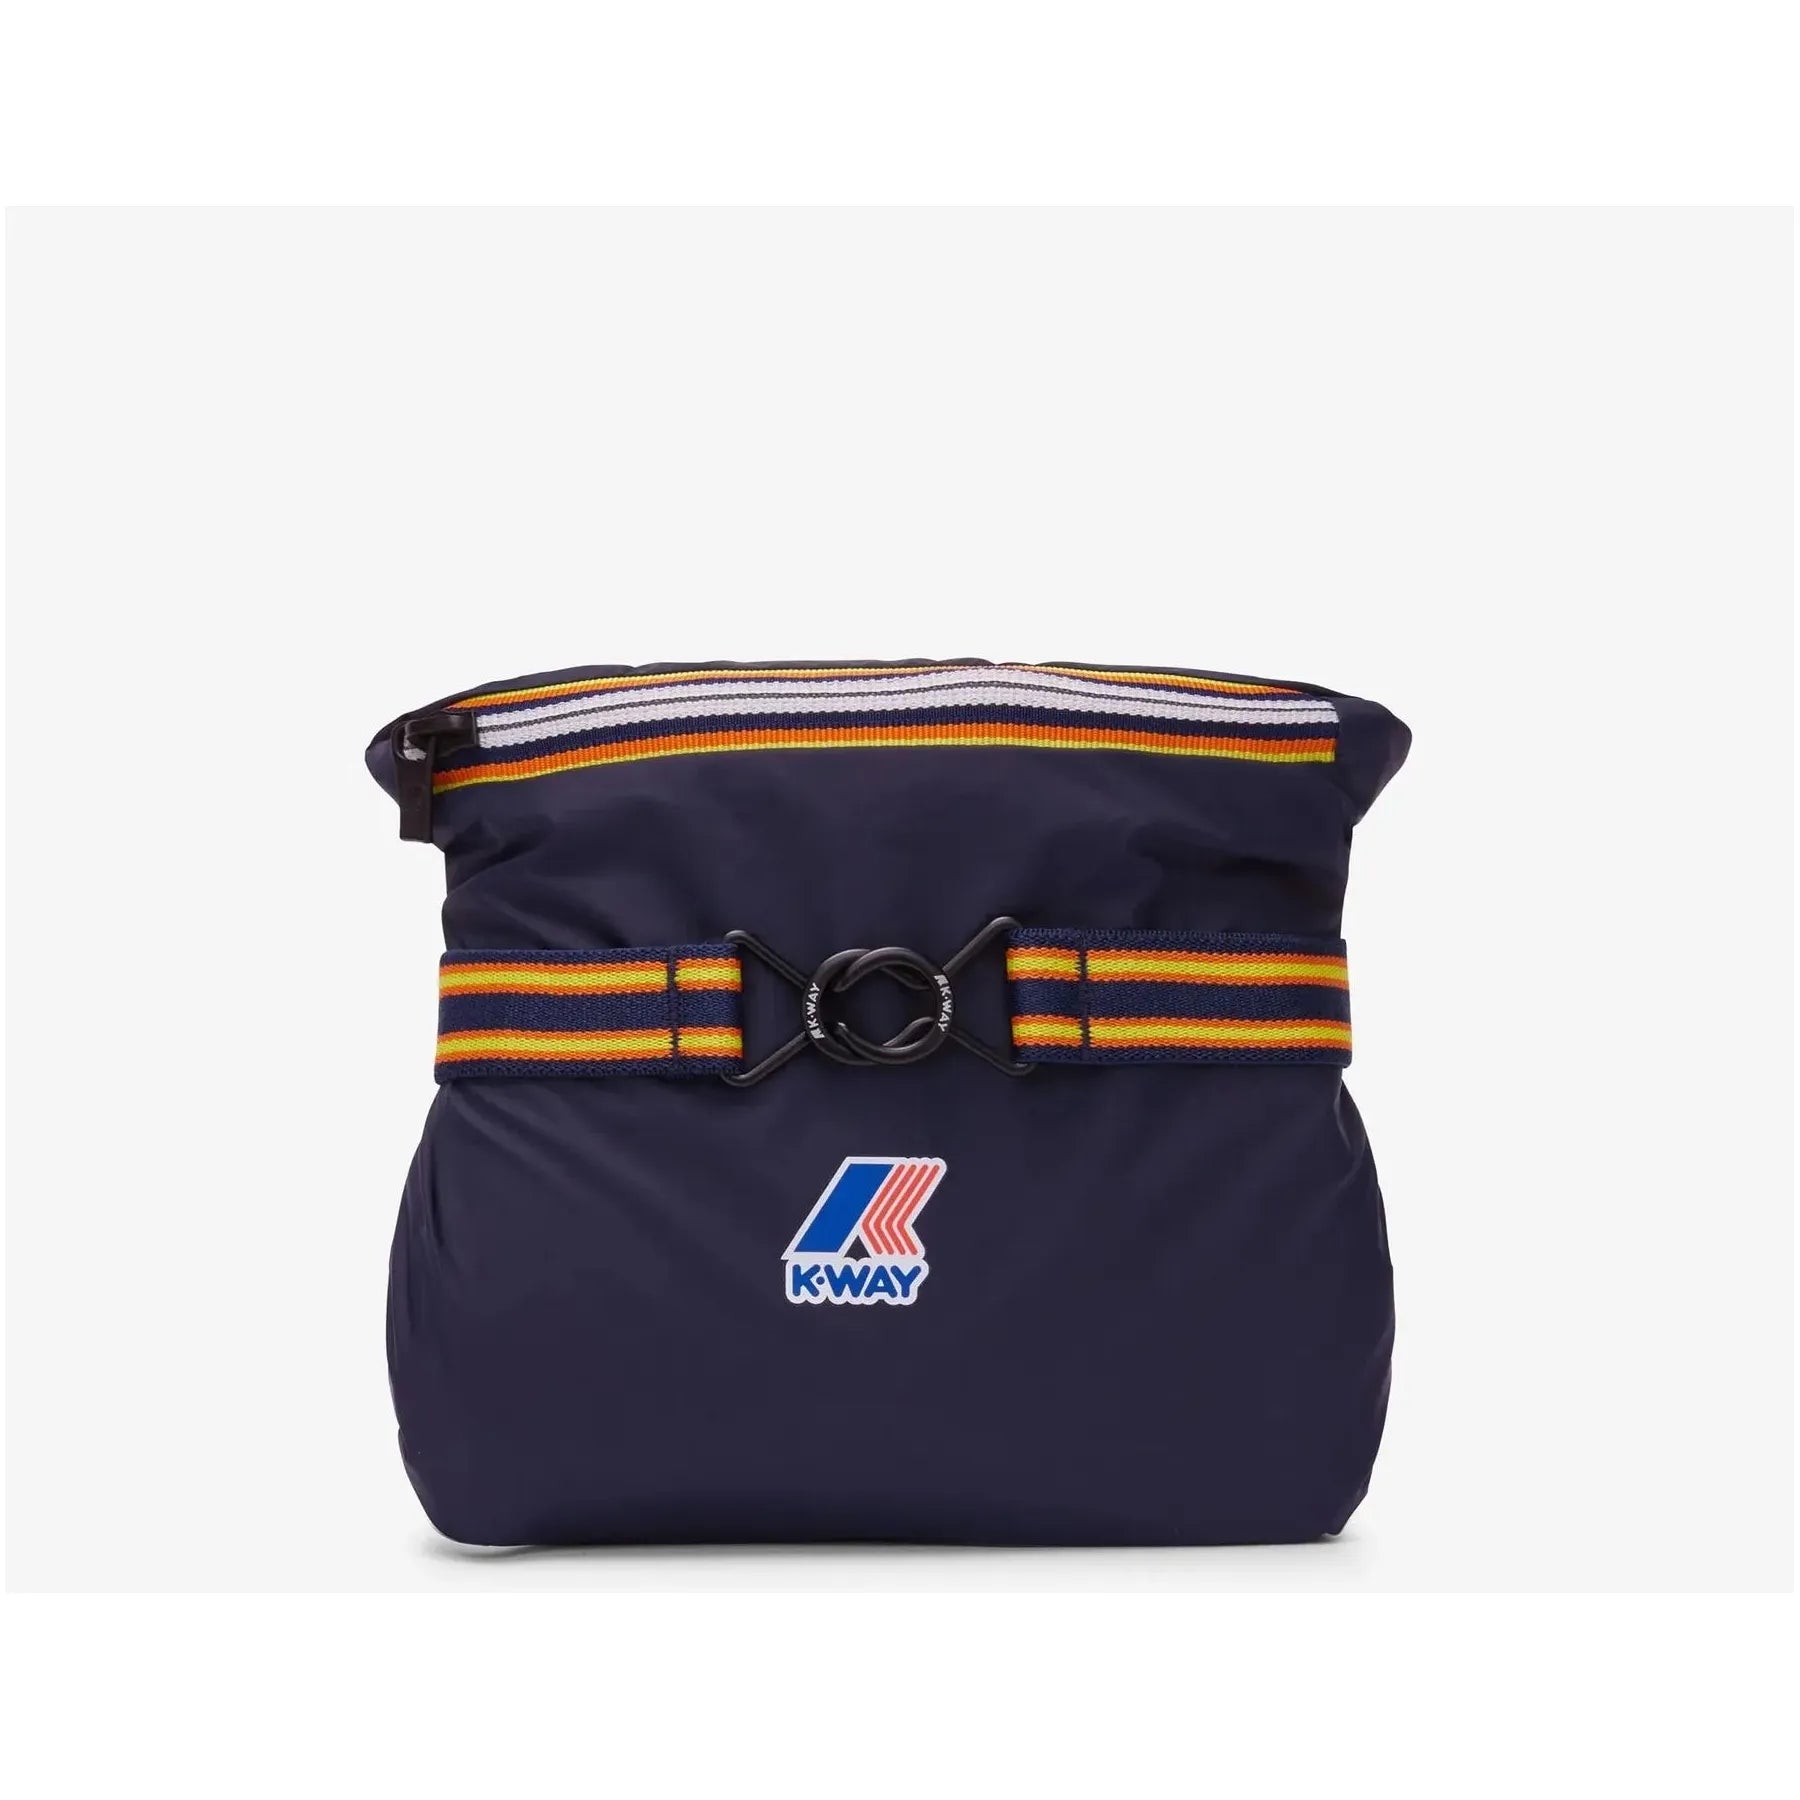 Le Vrai 3.0 Claude, Blue Depth k-way belt bag featuring multicolored stripes, a central logo, and a clasp closure.